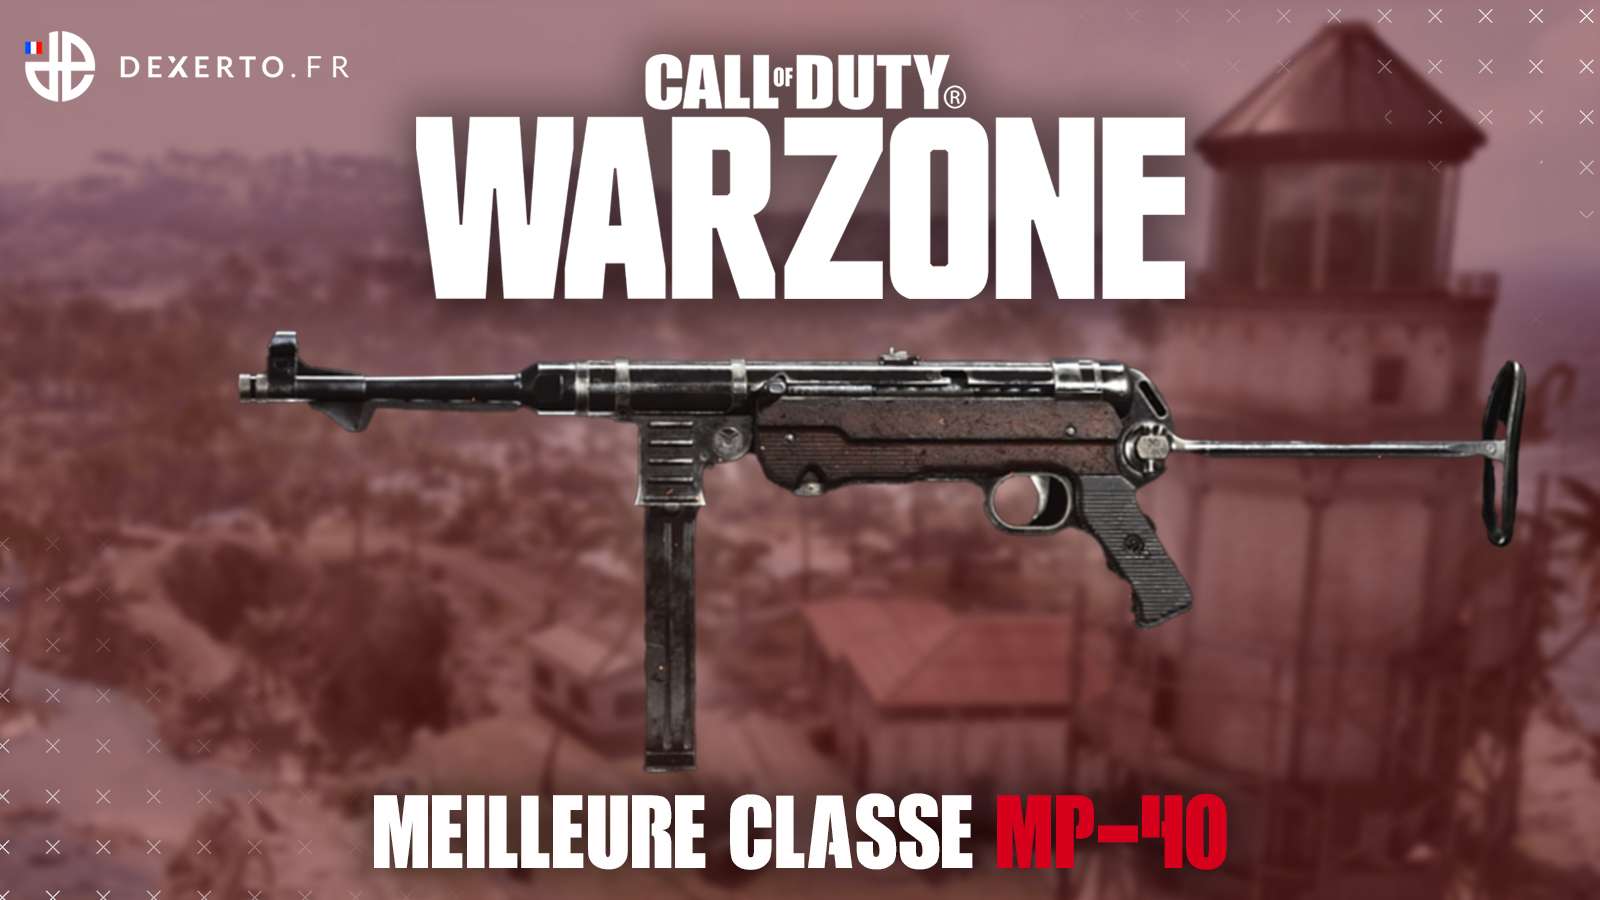 MP-40 warzone meilleure classe